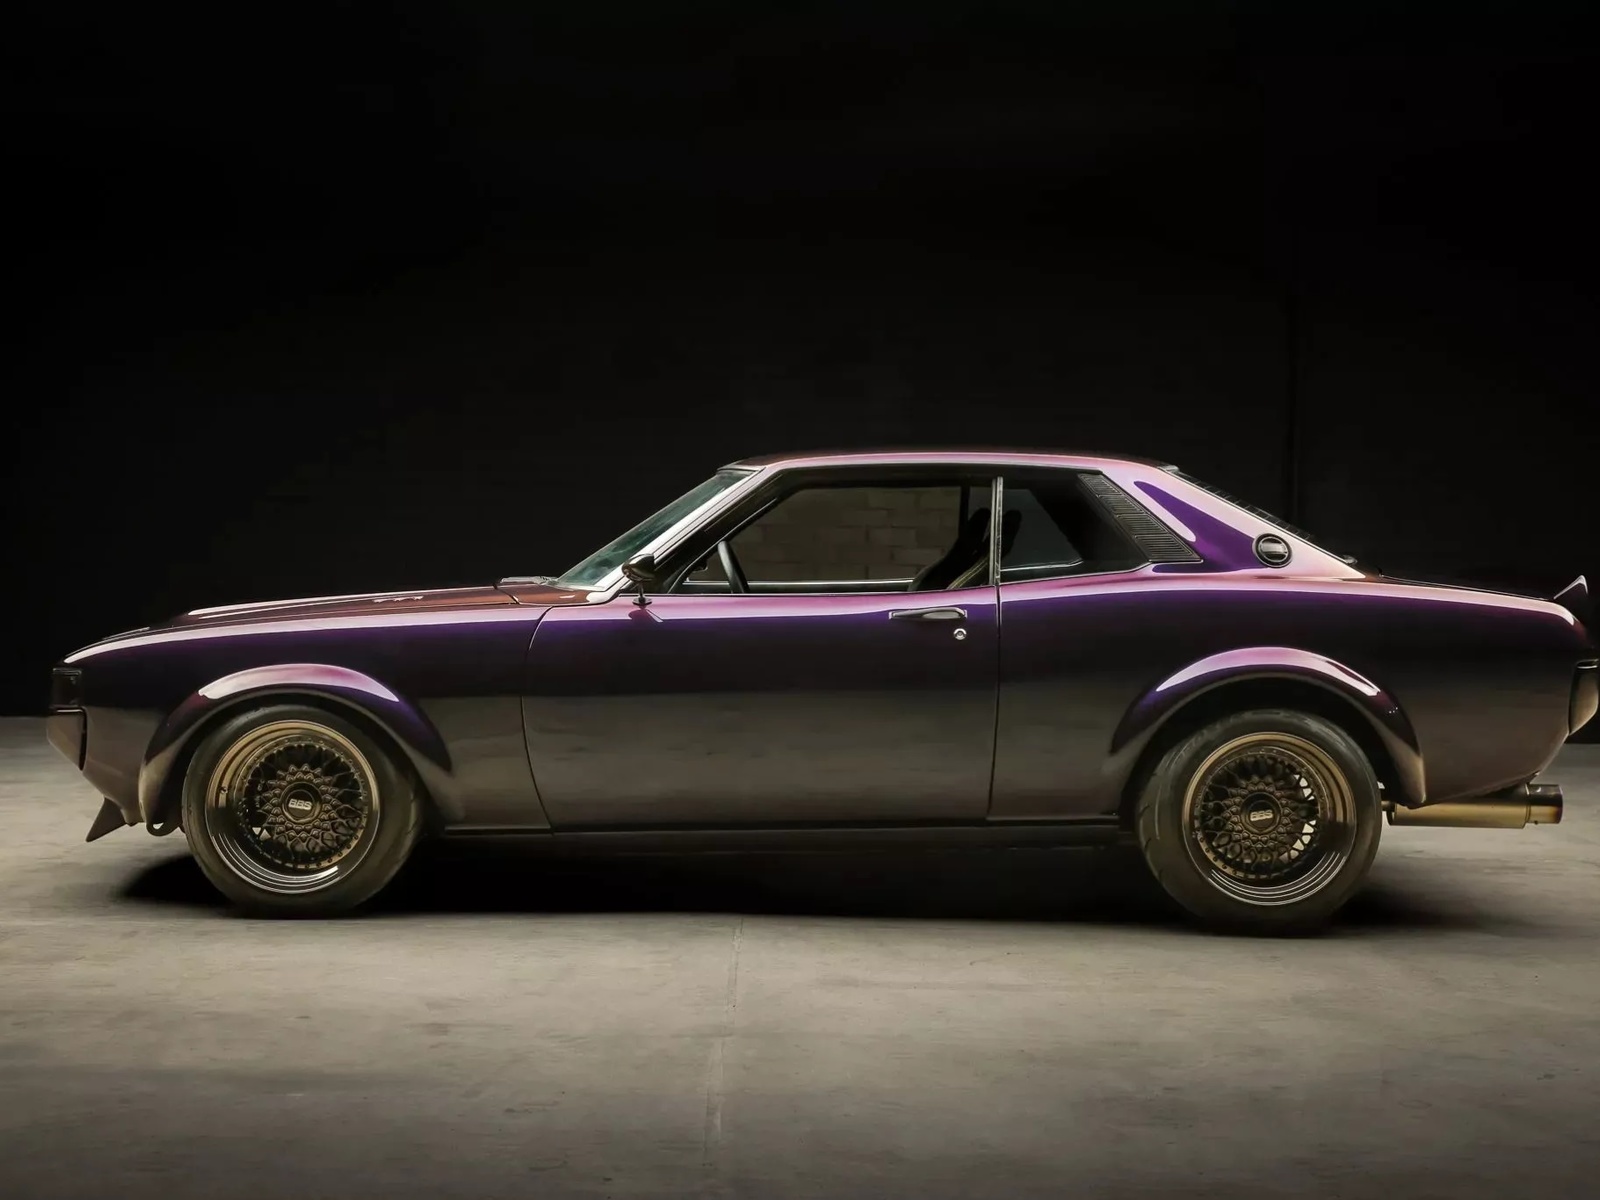 toyota, toyota celica, vehicle, powered 1977, classic car, purple cars